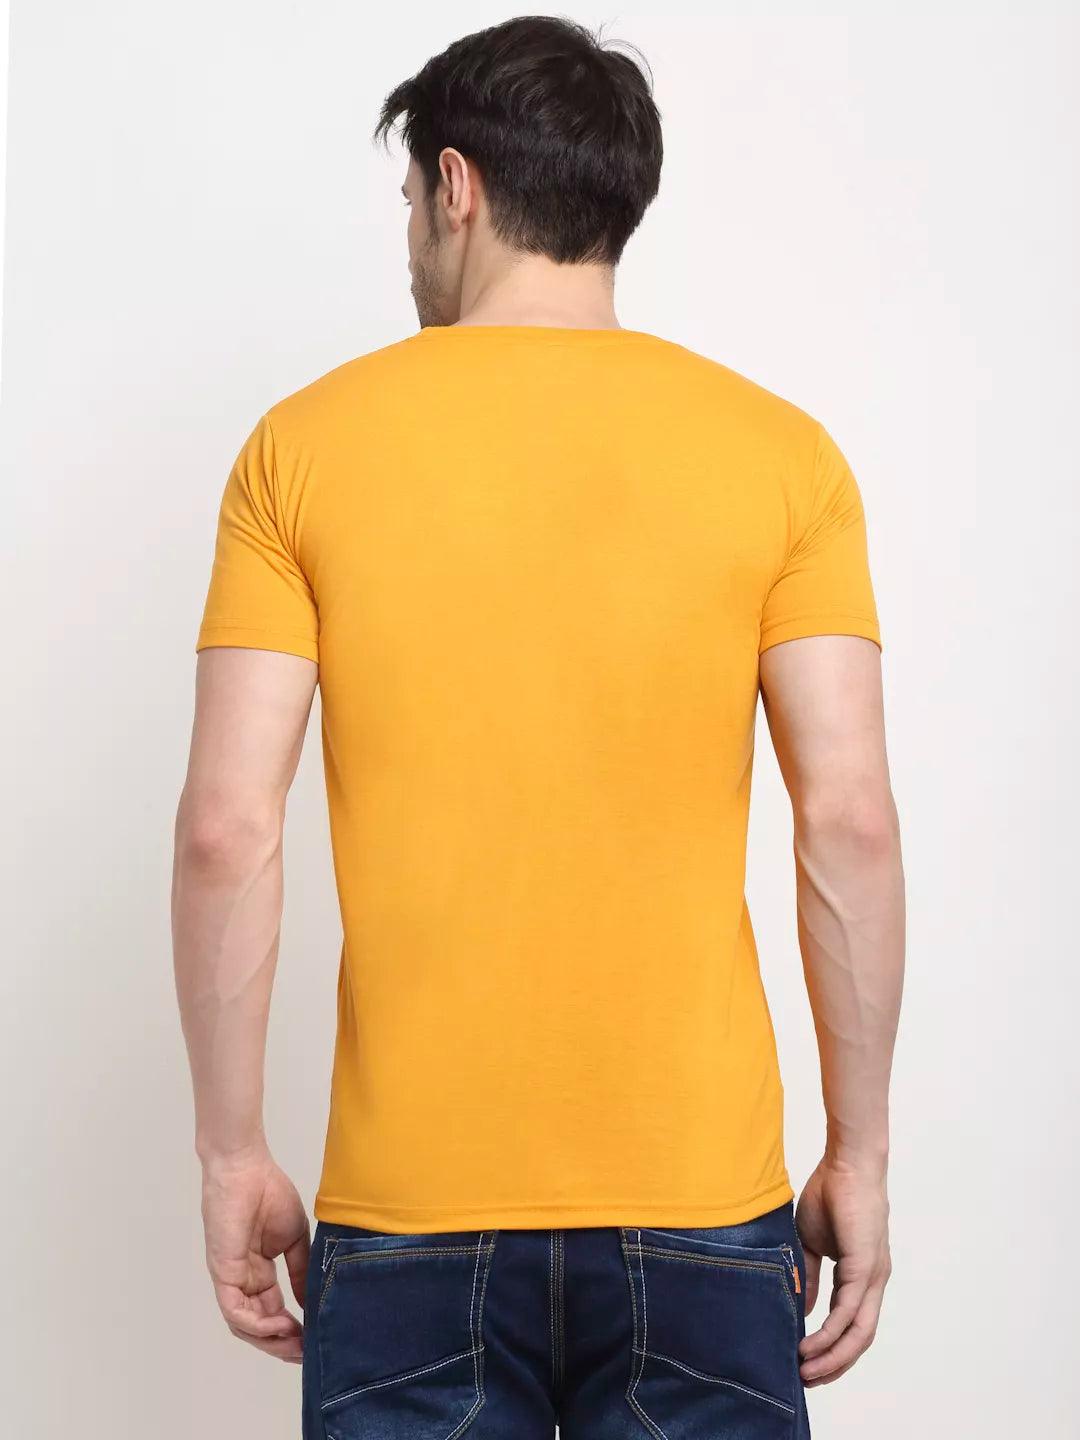 Rodamo Cotton Printed Mustard T-Shirt (Medium) - ShopIMO